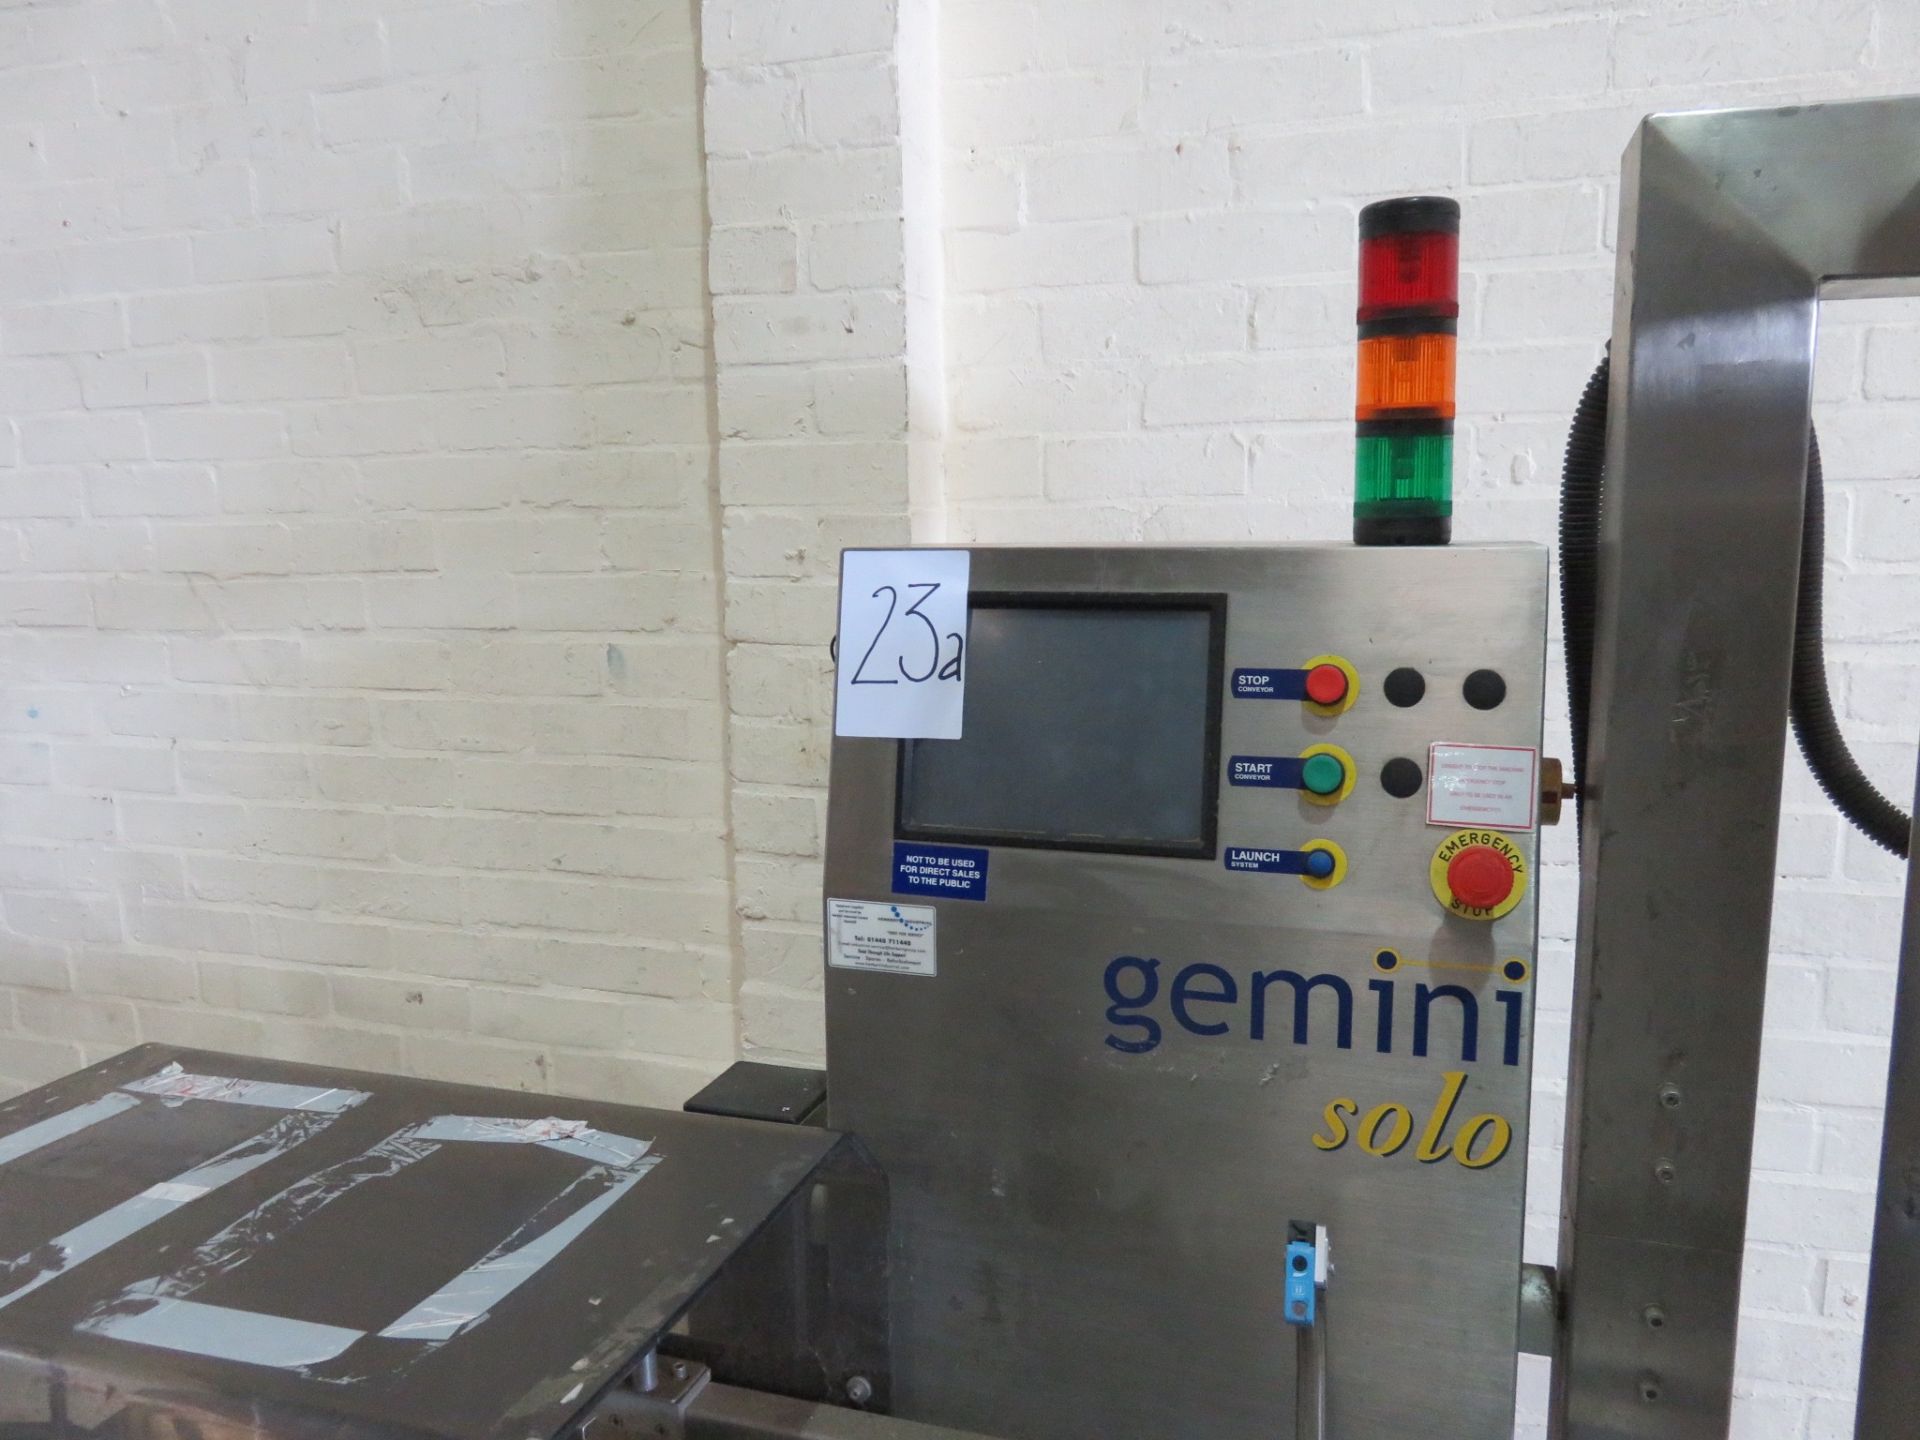 Herbert Gemini Solo - Weigh, price & labelling machine. Model Gemini. Weigh platform LIFT OUT £10